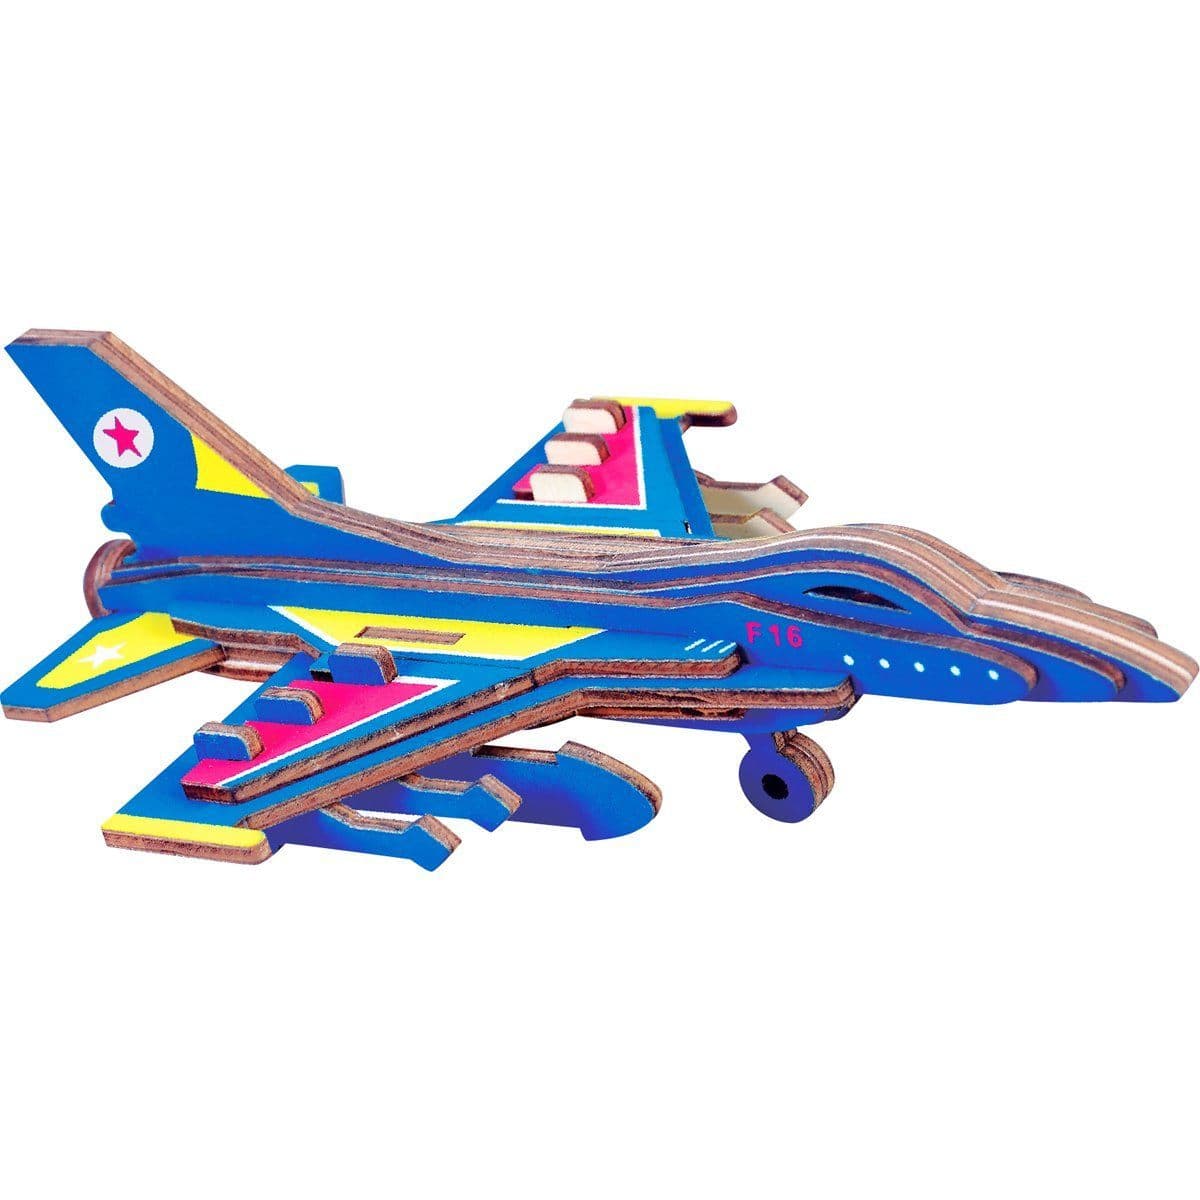 Pilot Toys F-16 Fighting Falcon 3D Puzzle